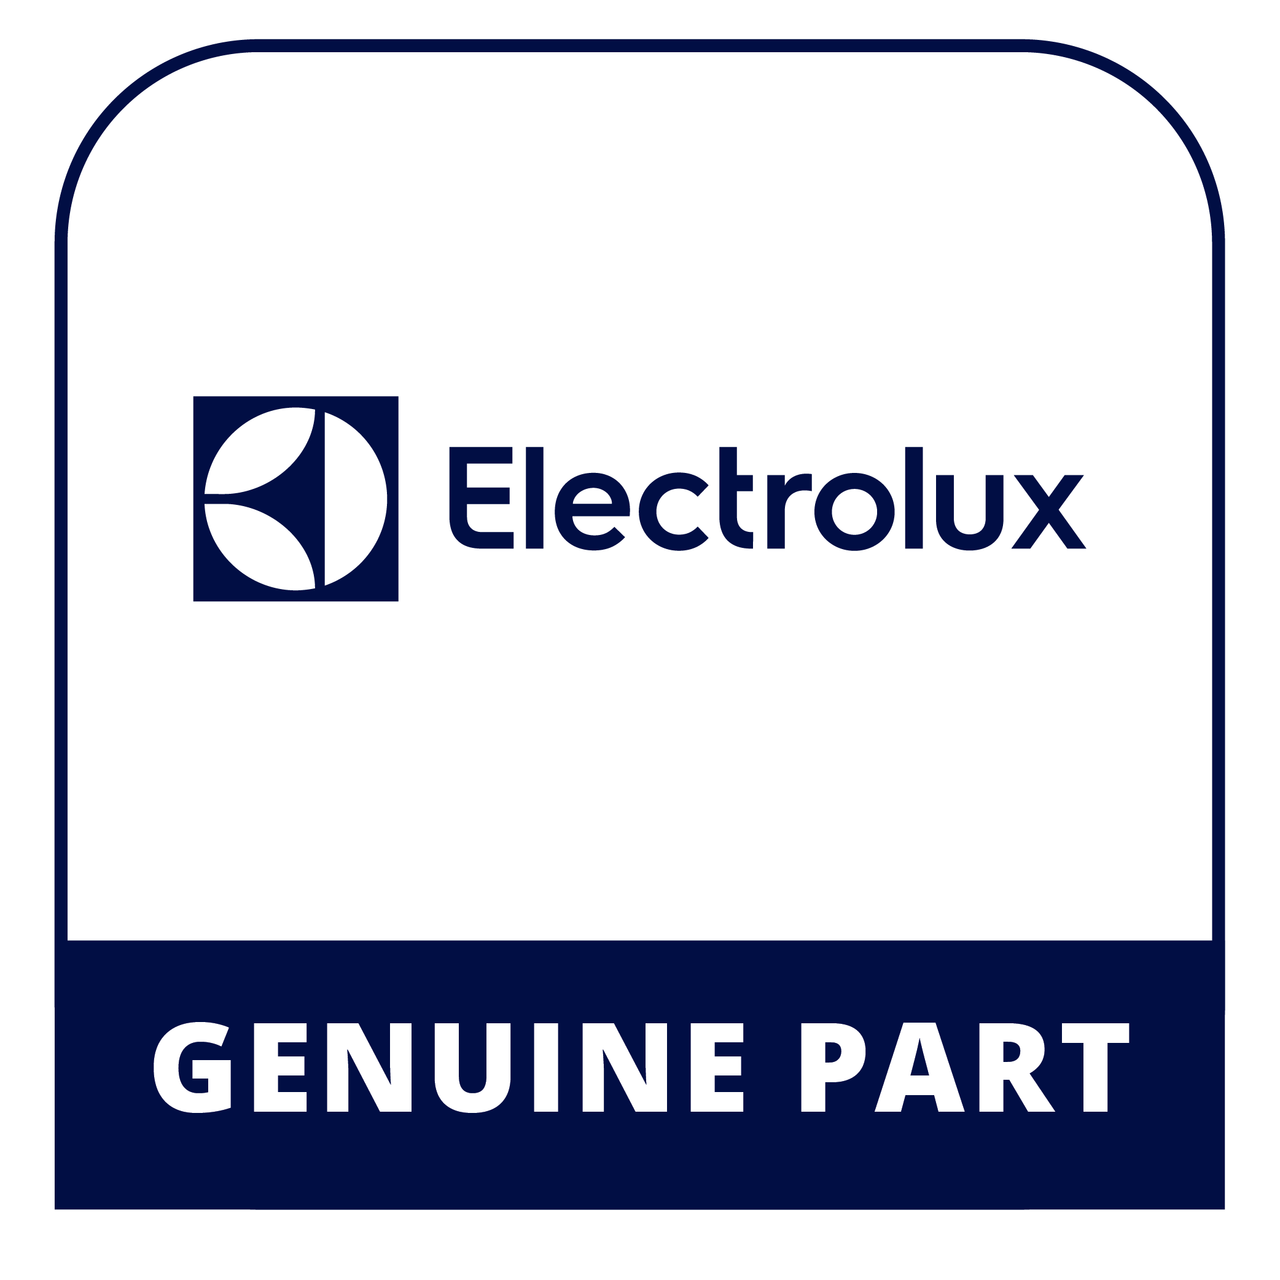 Frigidaire - Electrolux 316633013 Overlay - Genuine Electrolux Part